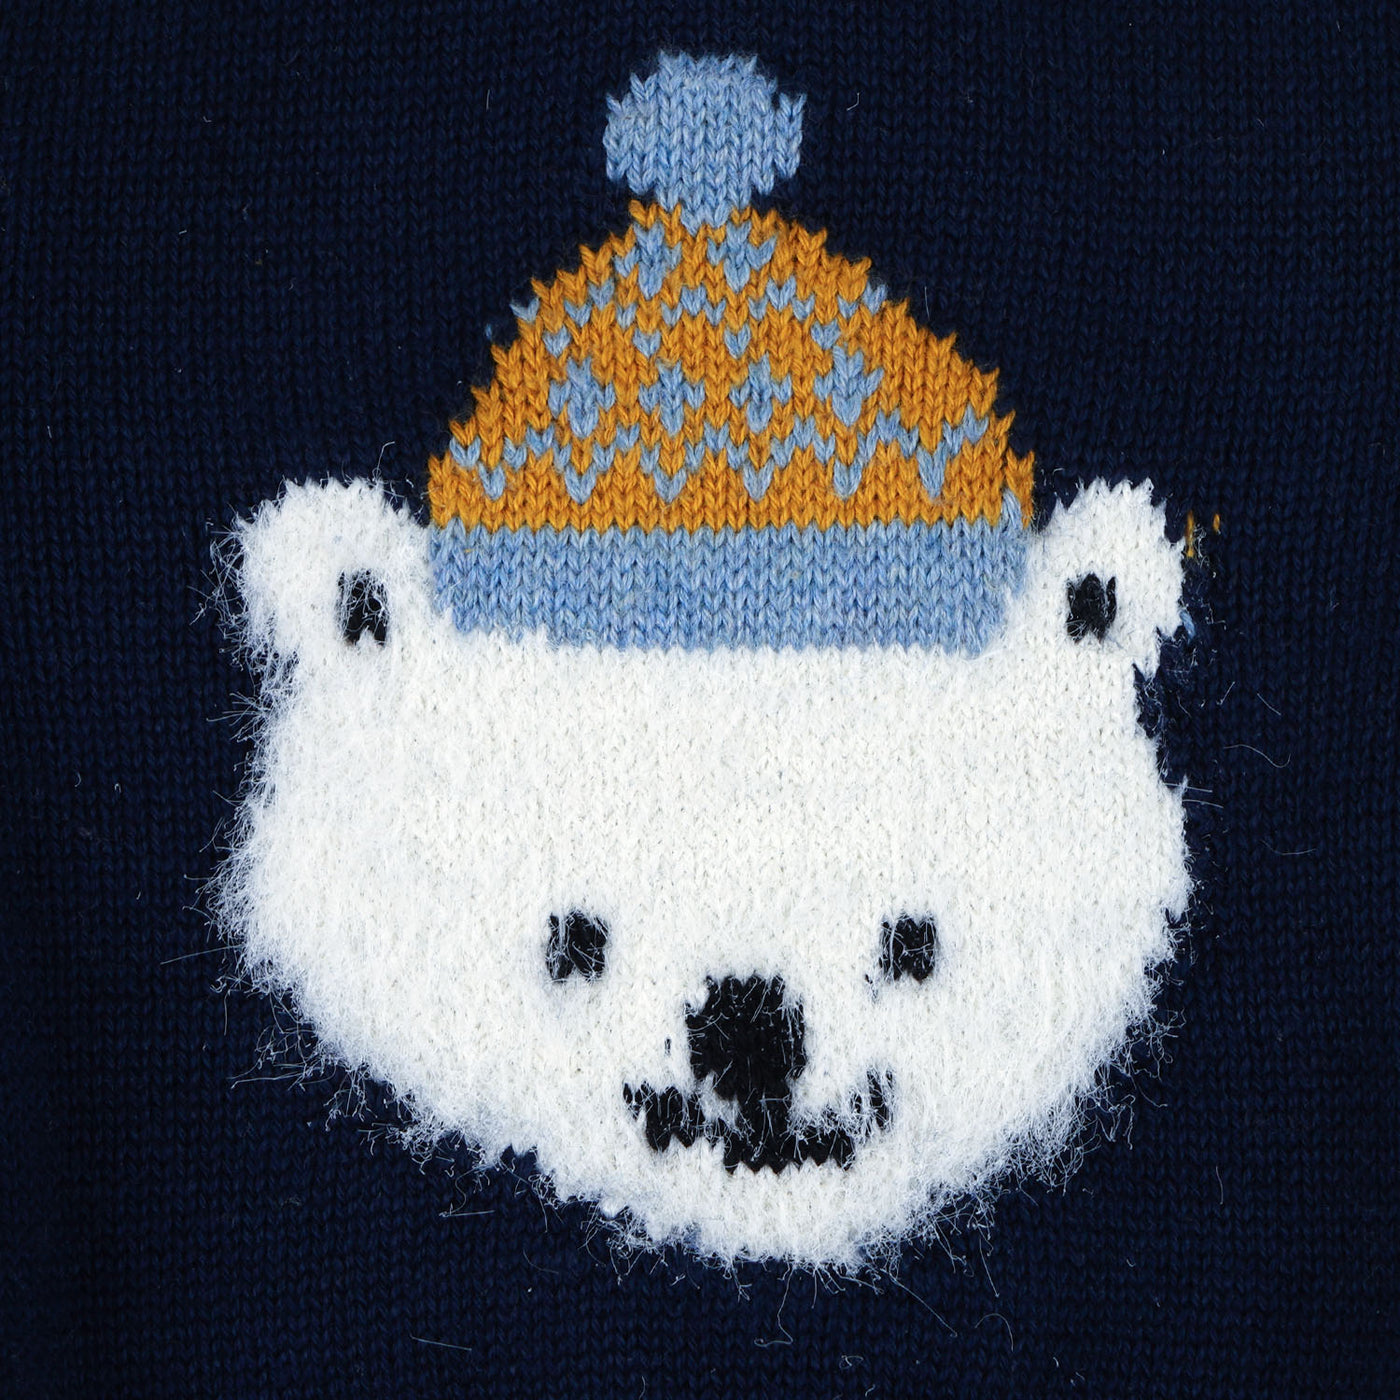 Infant Boys Sweater Bear - NAVY